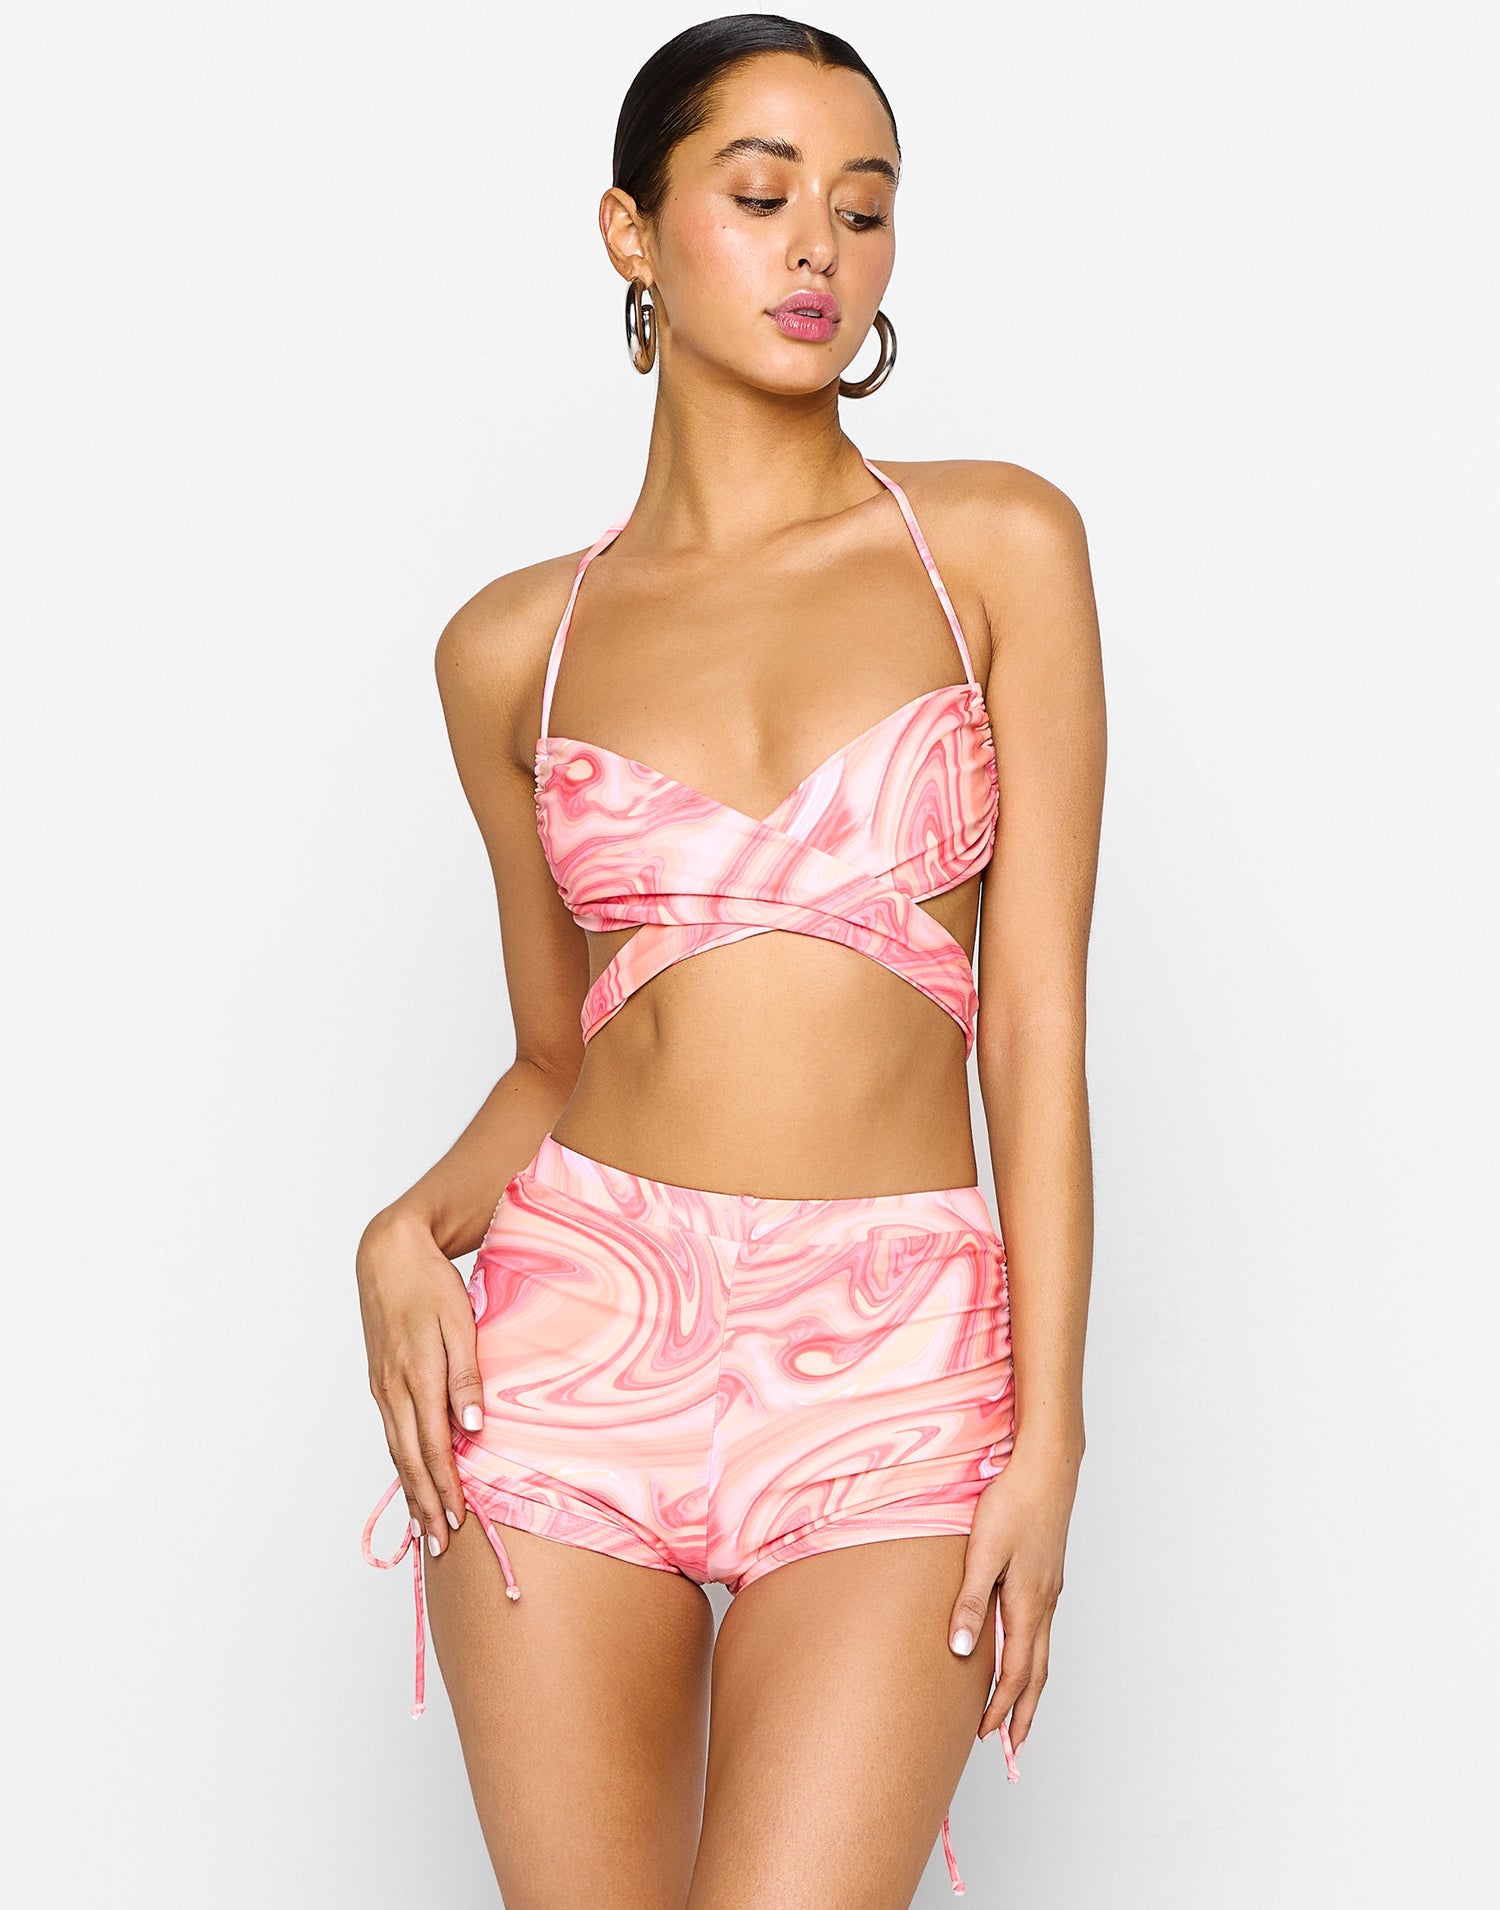 Elsa Wrap Versatile Bikini Top in Pink/Orange Multi by Summer Haus - Front View 